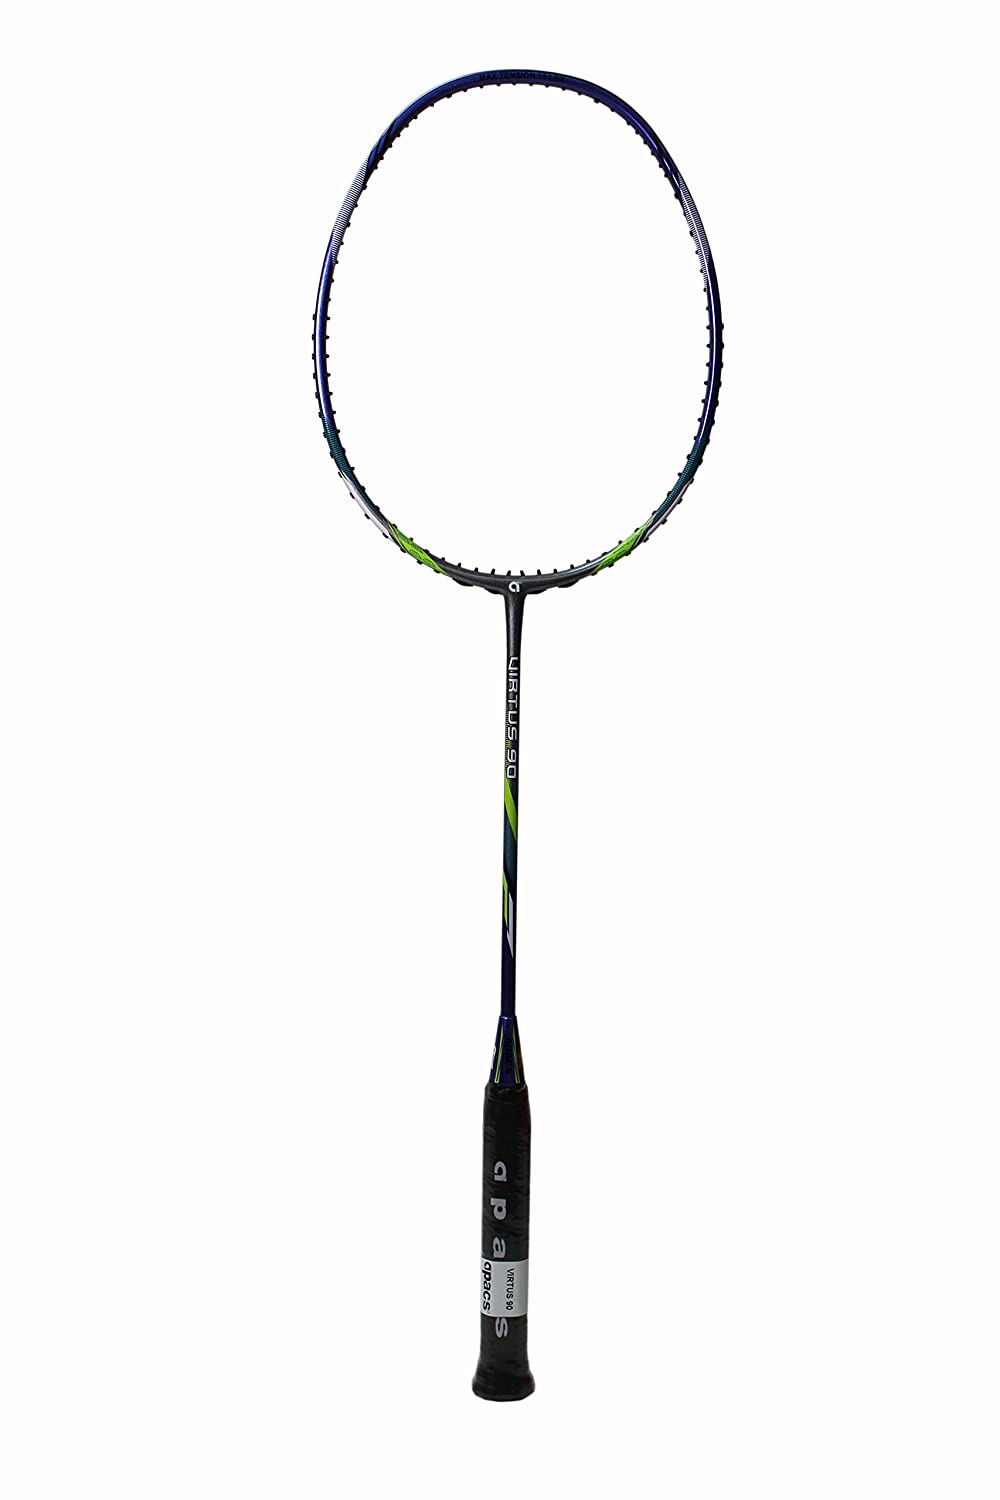 apacs racket price